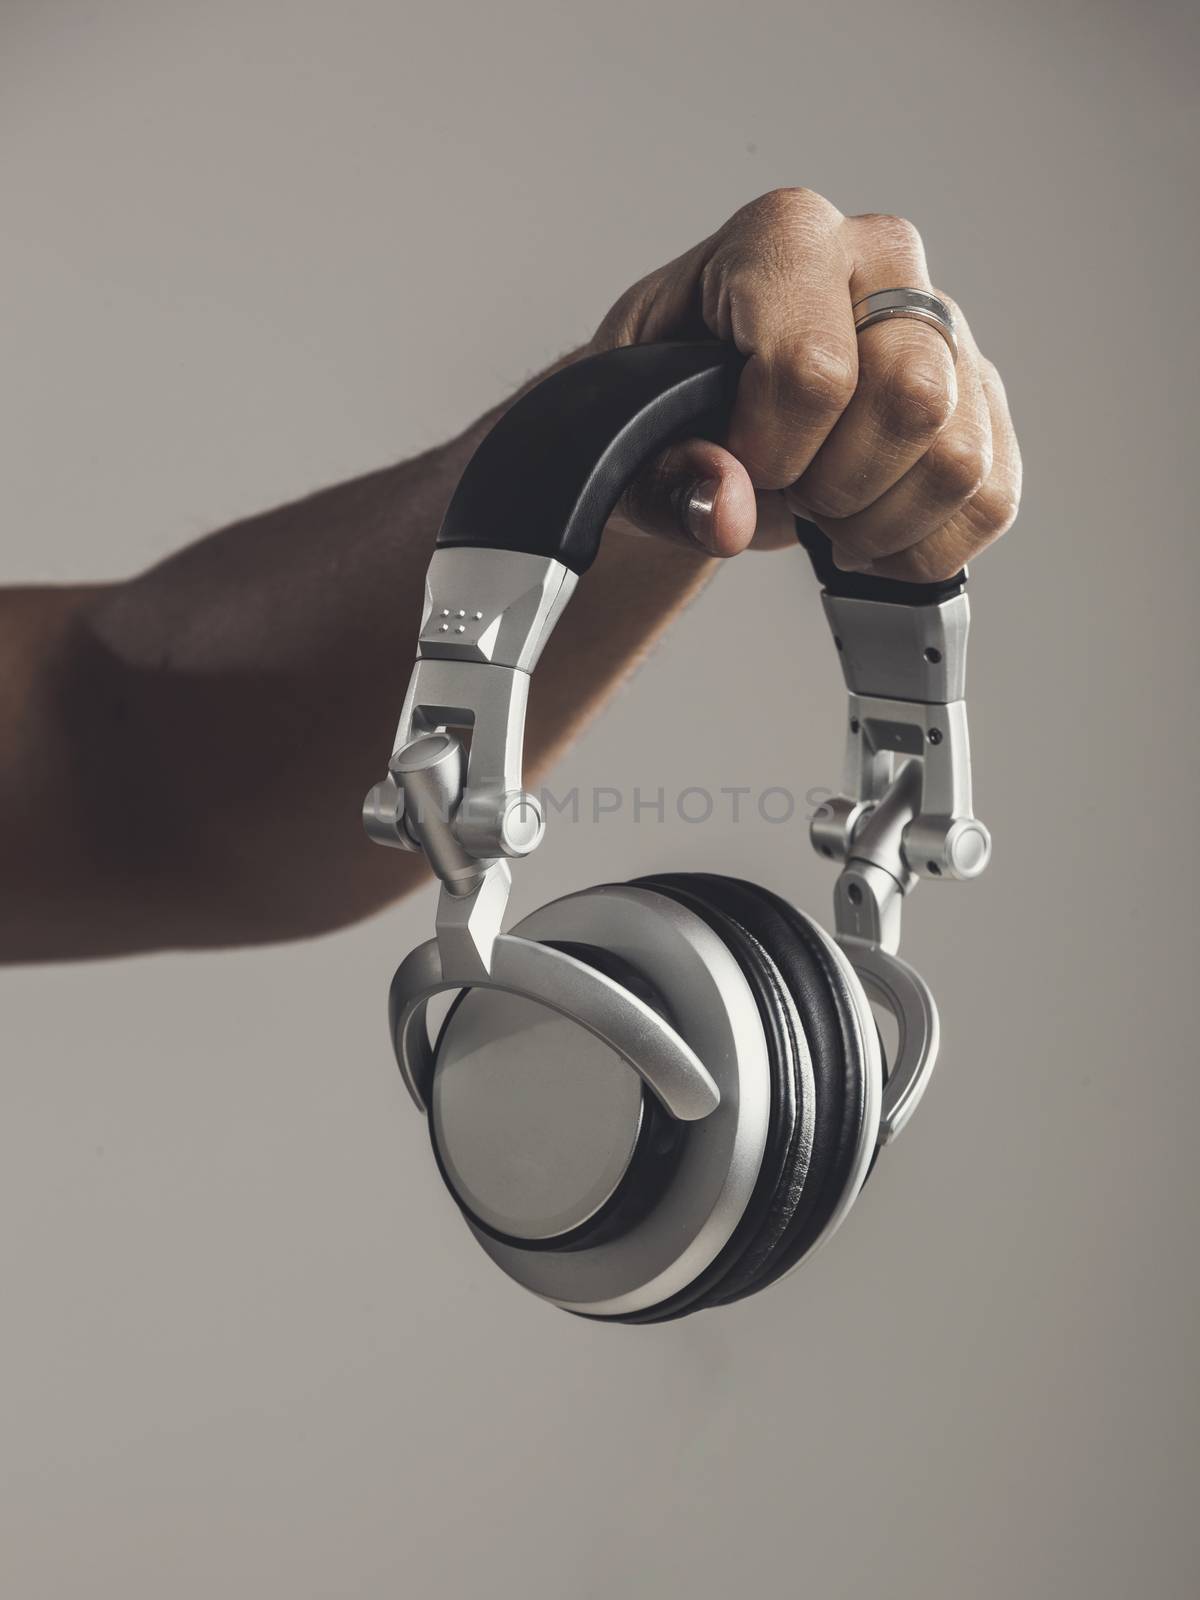 DJ holding him headphones by Iko